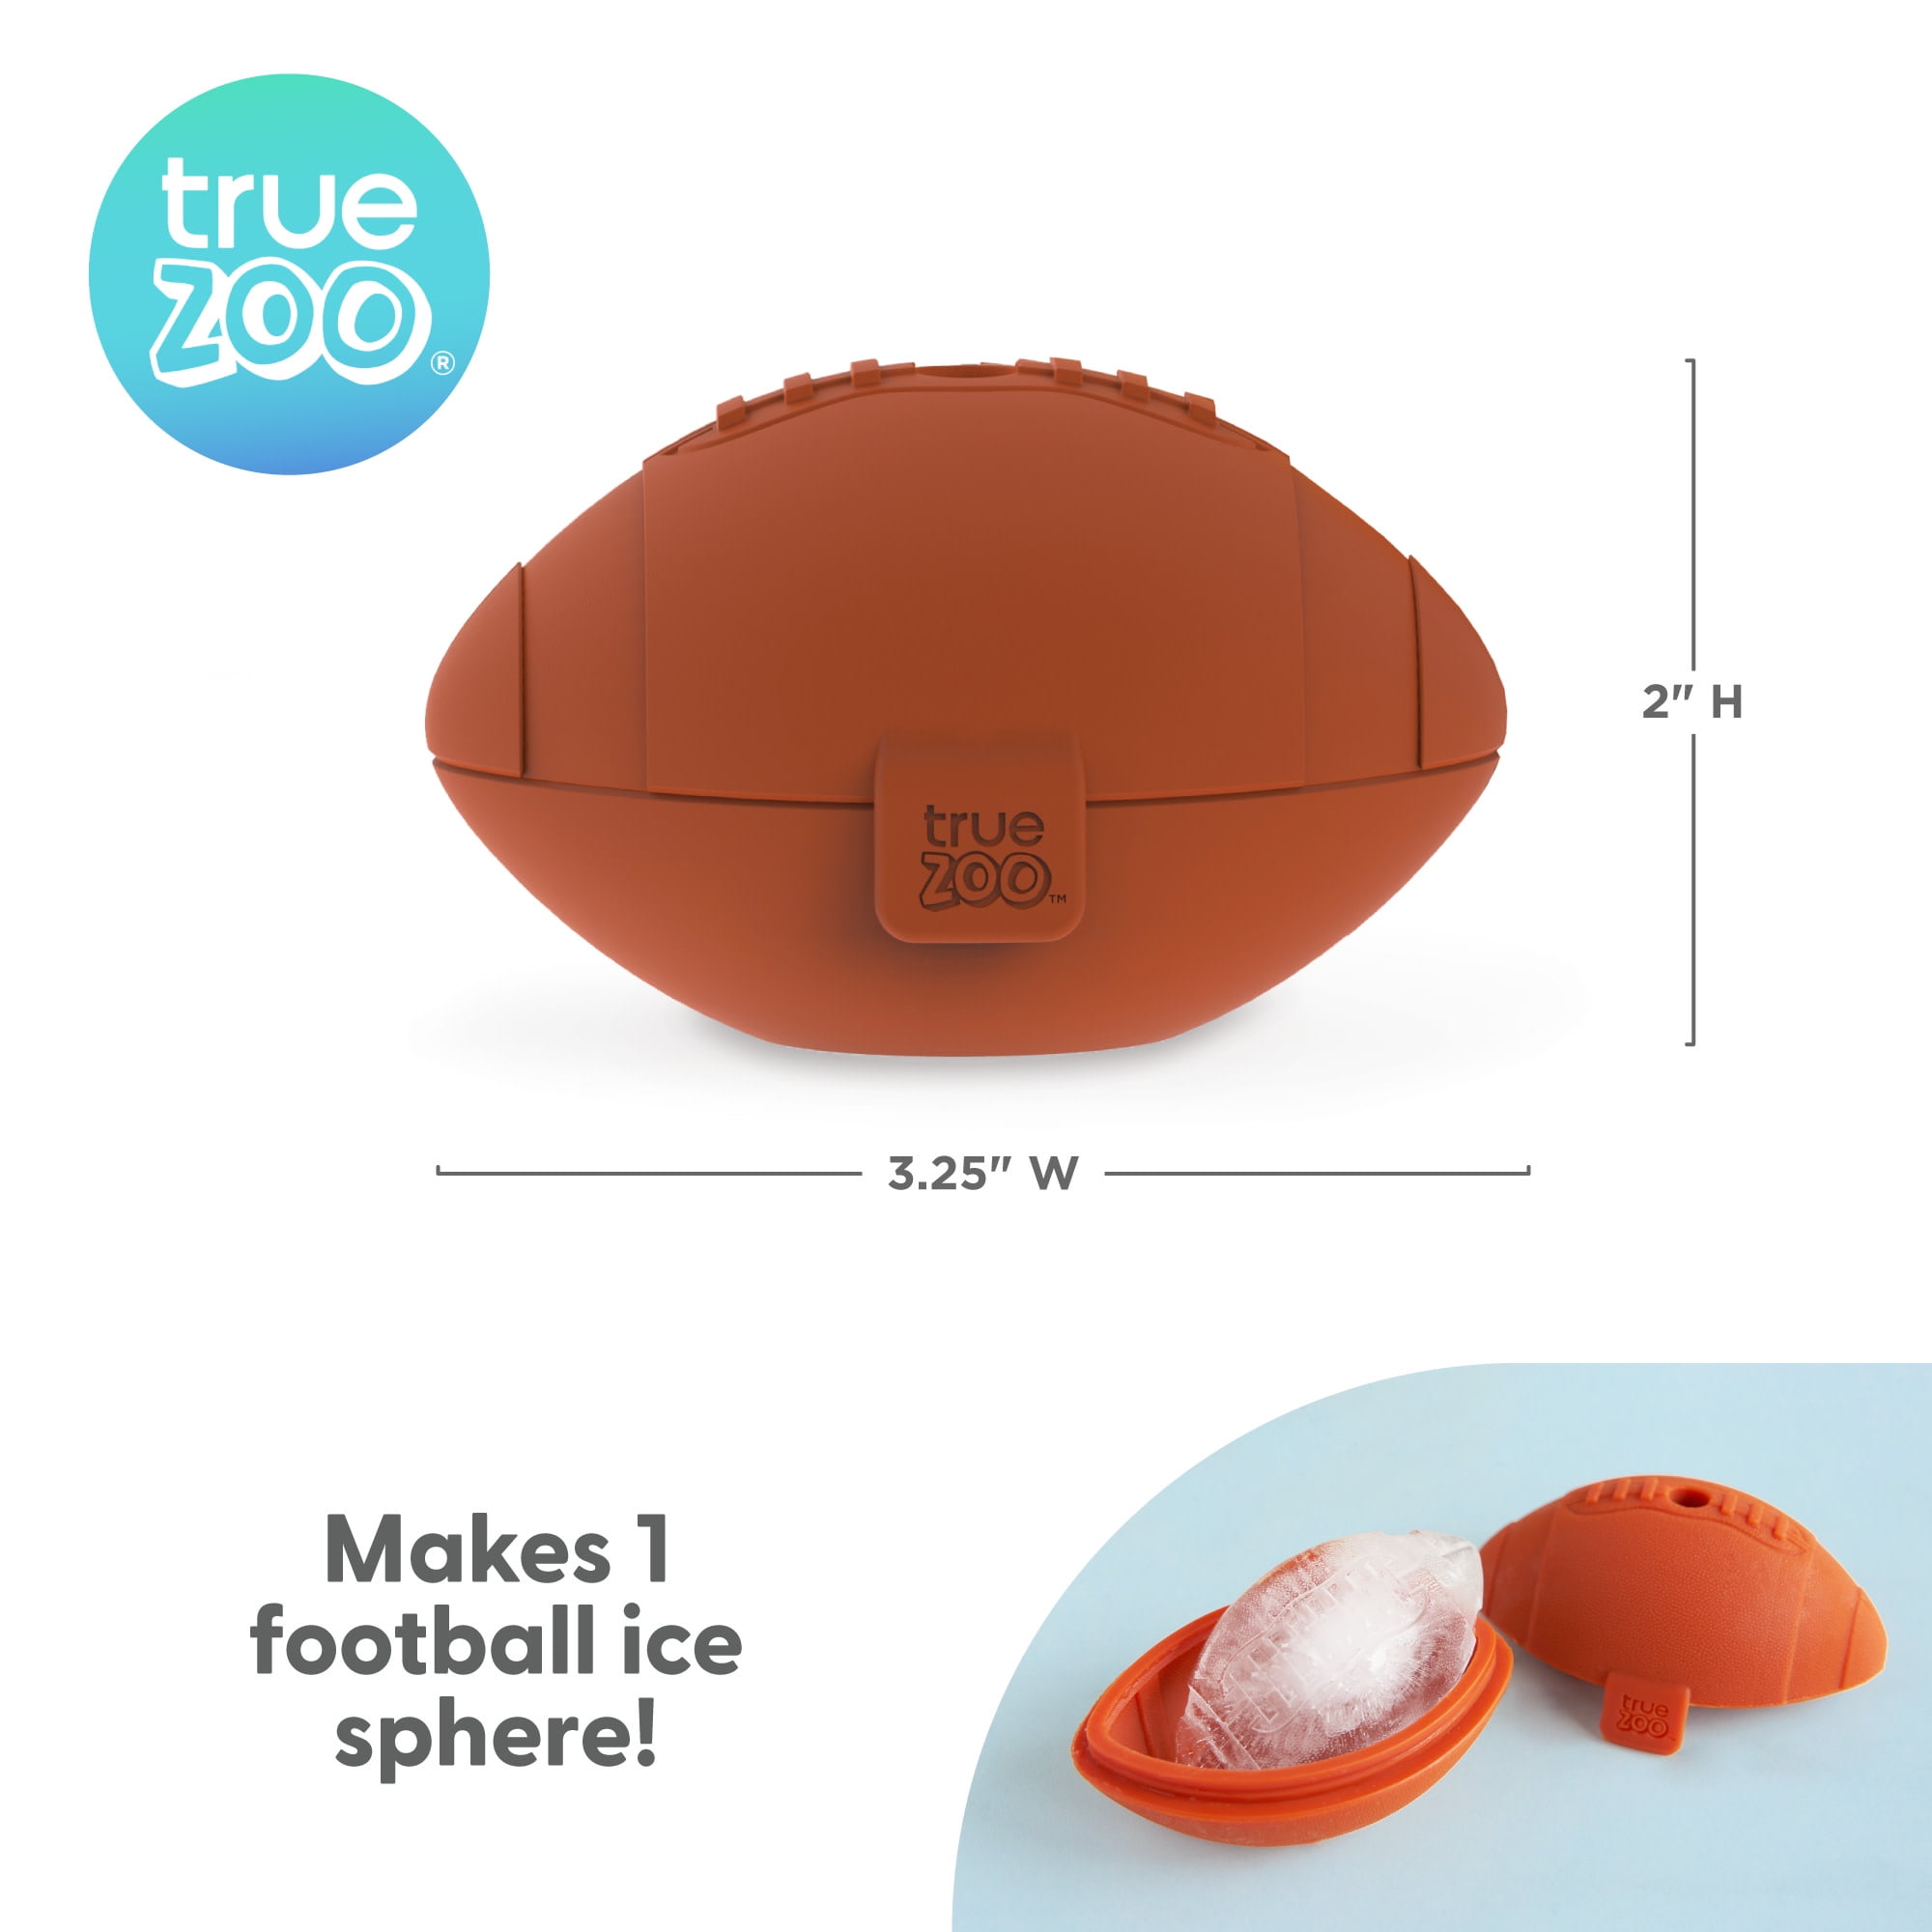  True Zoo Baseball Ice Mold, Silicone Ice Sphere Mold, Novelty  Ice Maker, Set of 1, White, Dishwasher Safe, Ice Cube Tray: Home & Kitchen